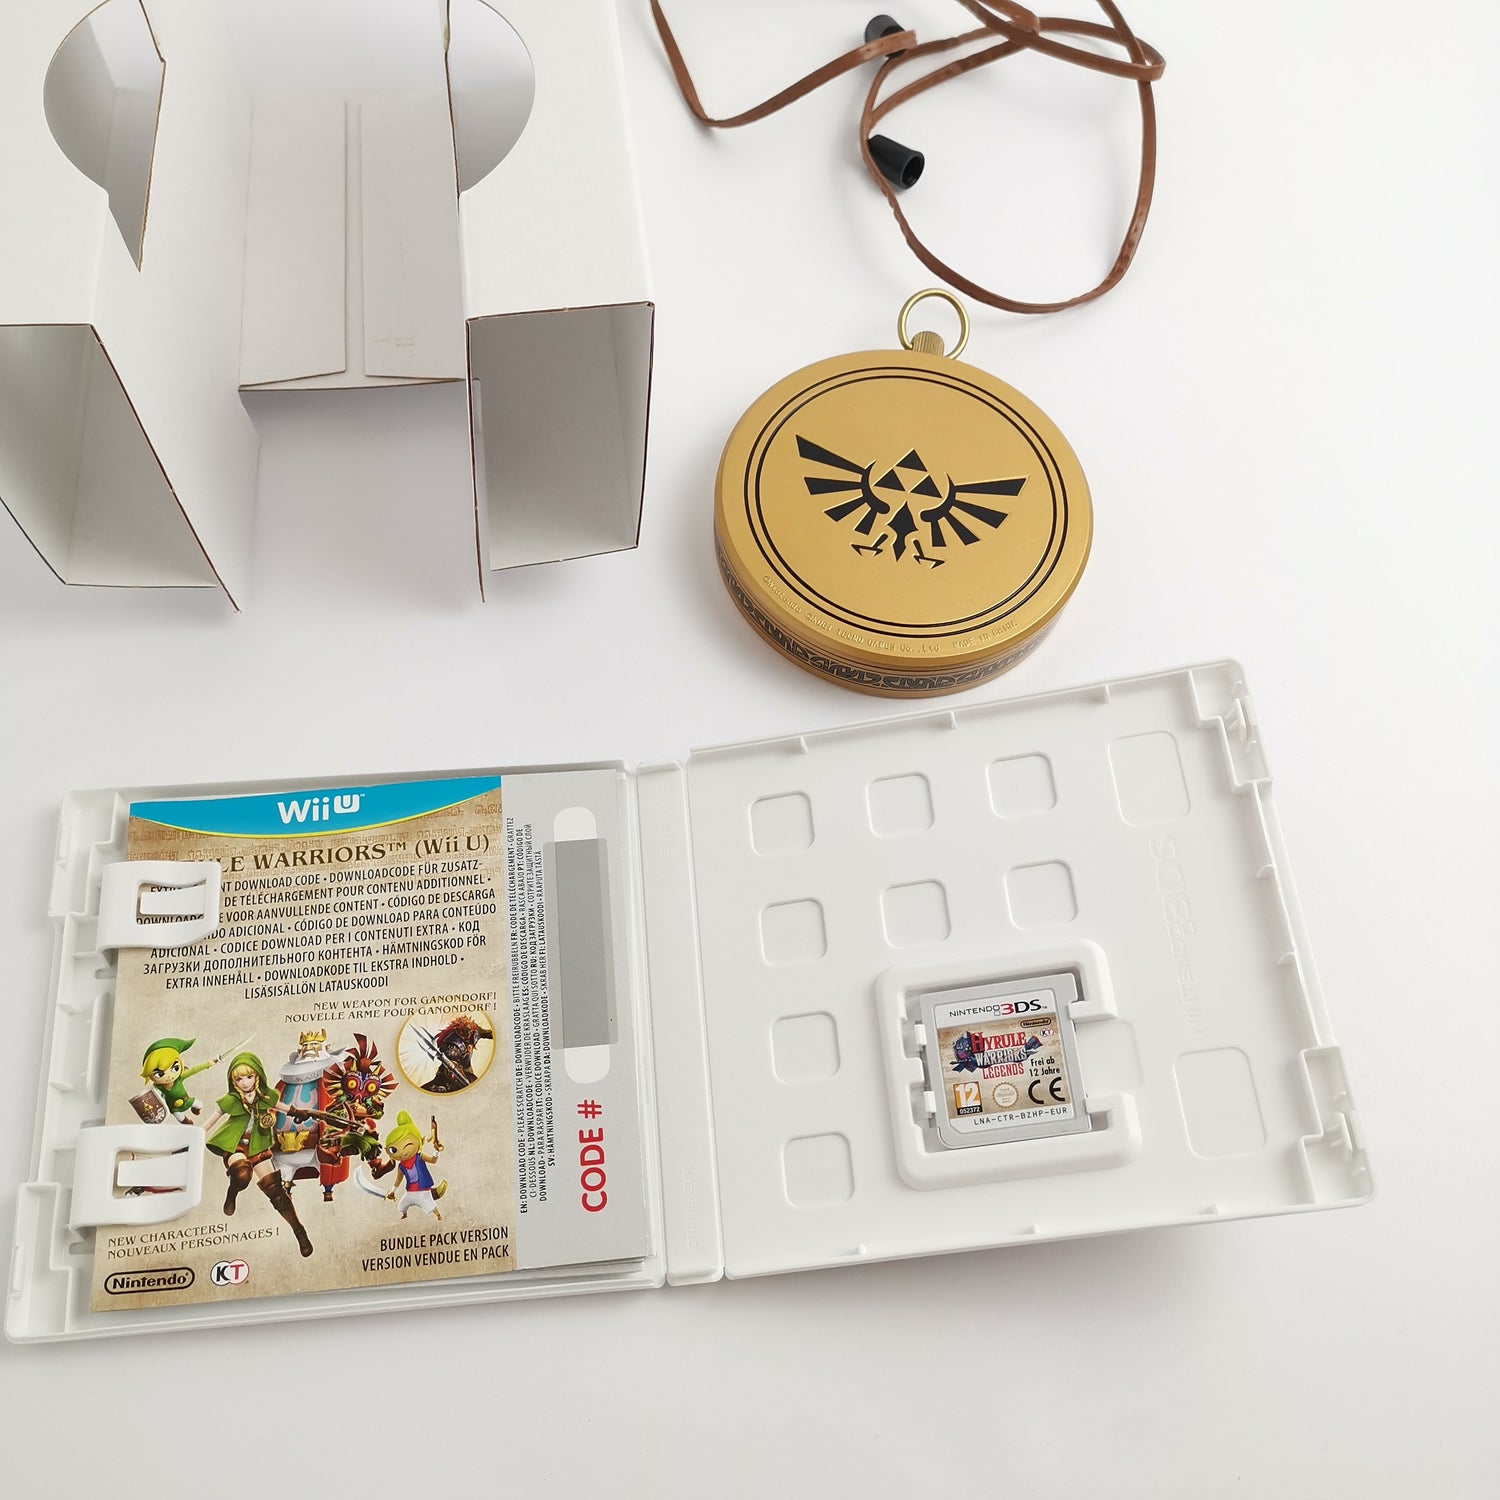 Nintendo 3DS Spiel : Hyrule Warriors Legends Limited Edition | 2DS komp. OVP PAL